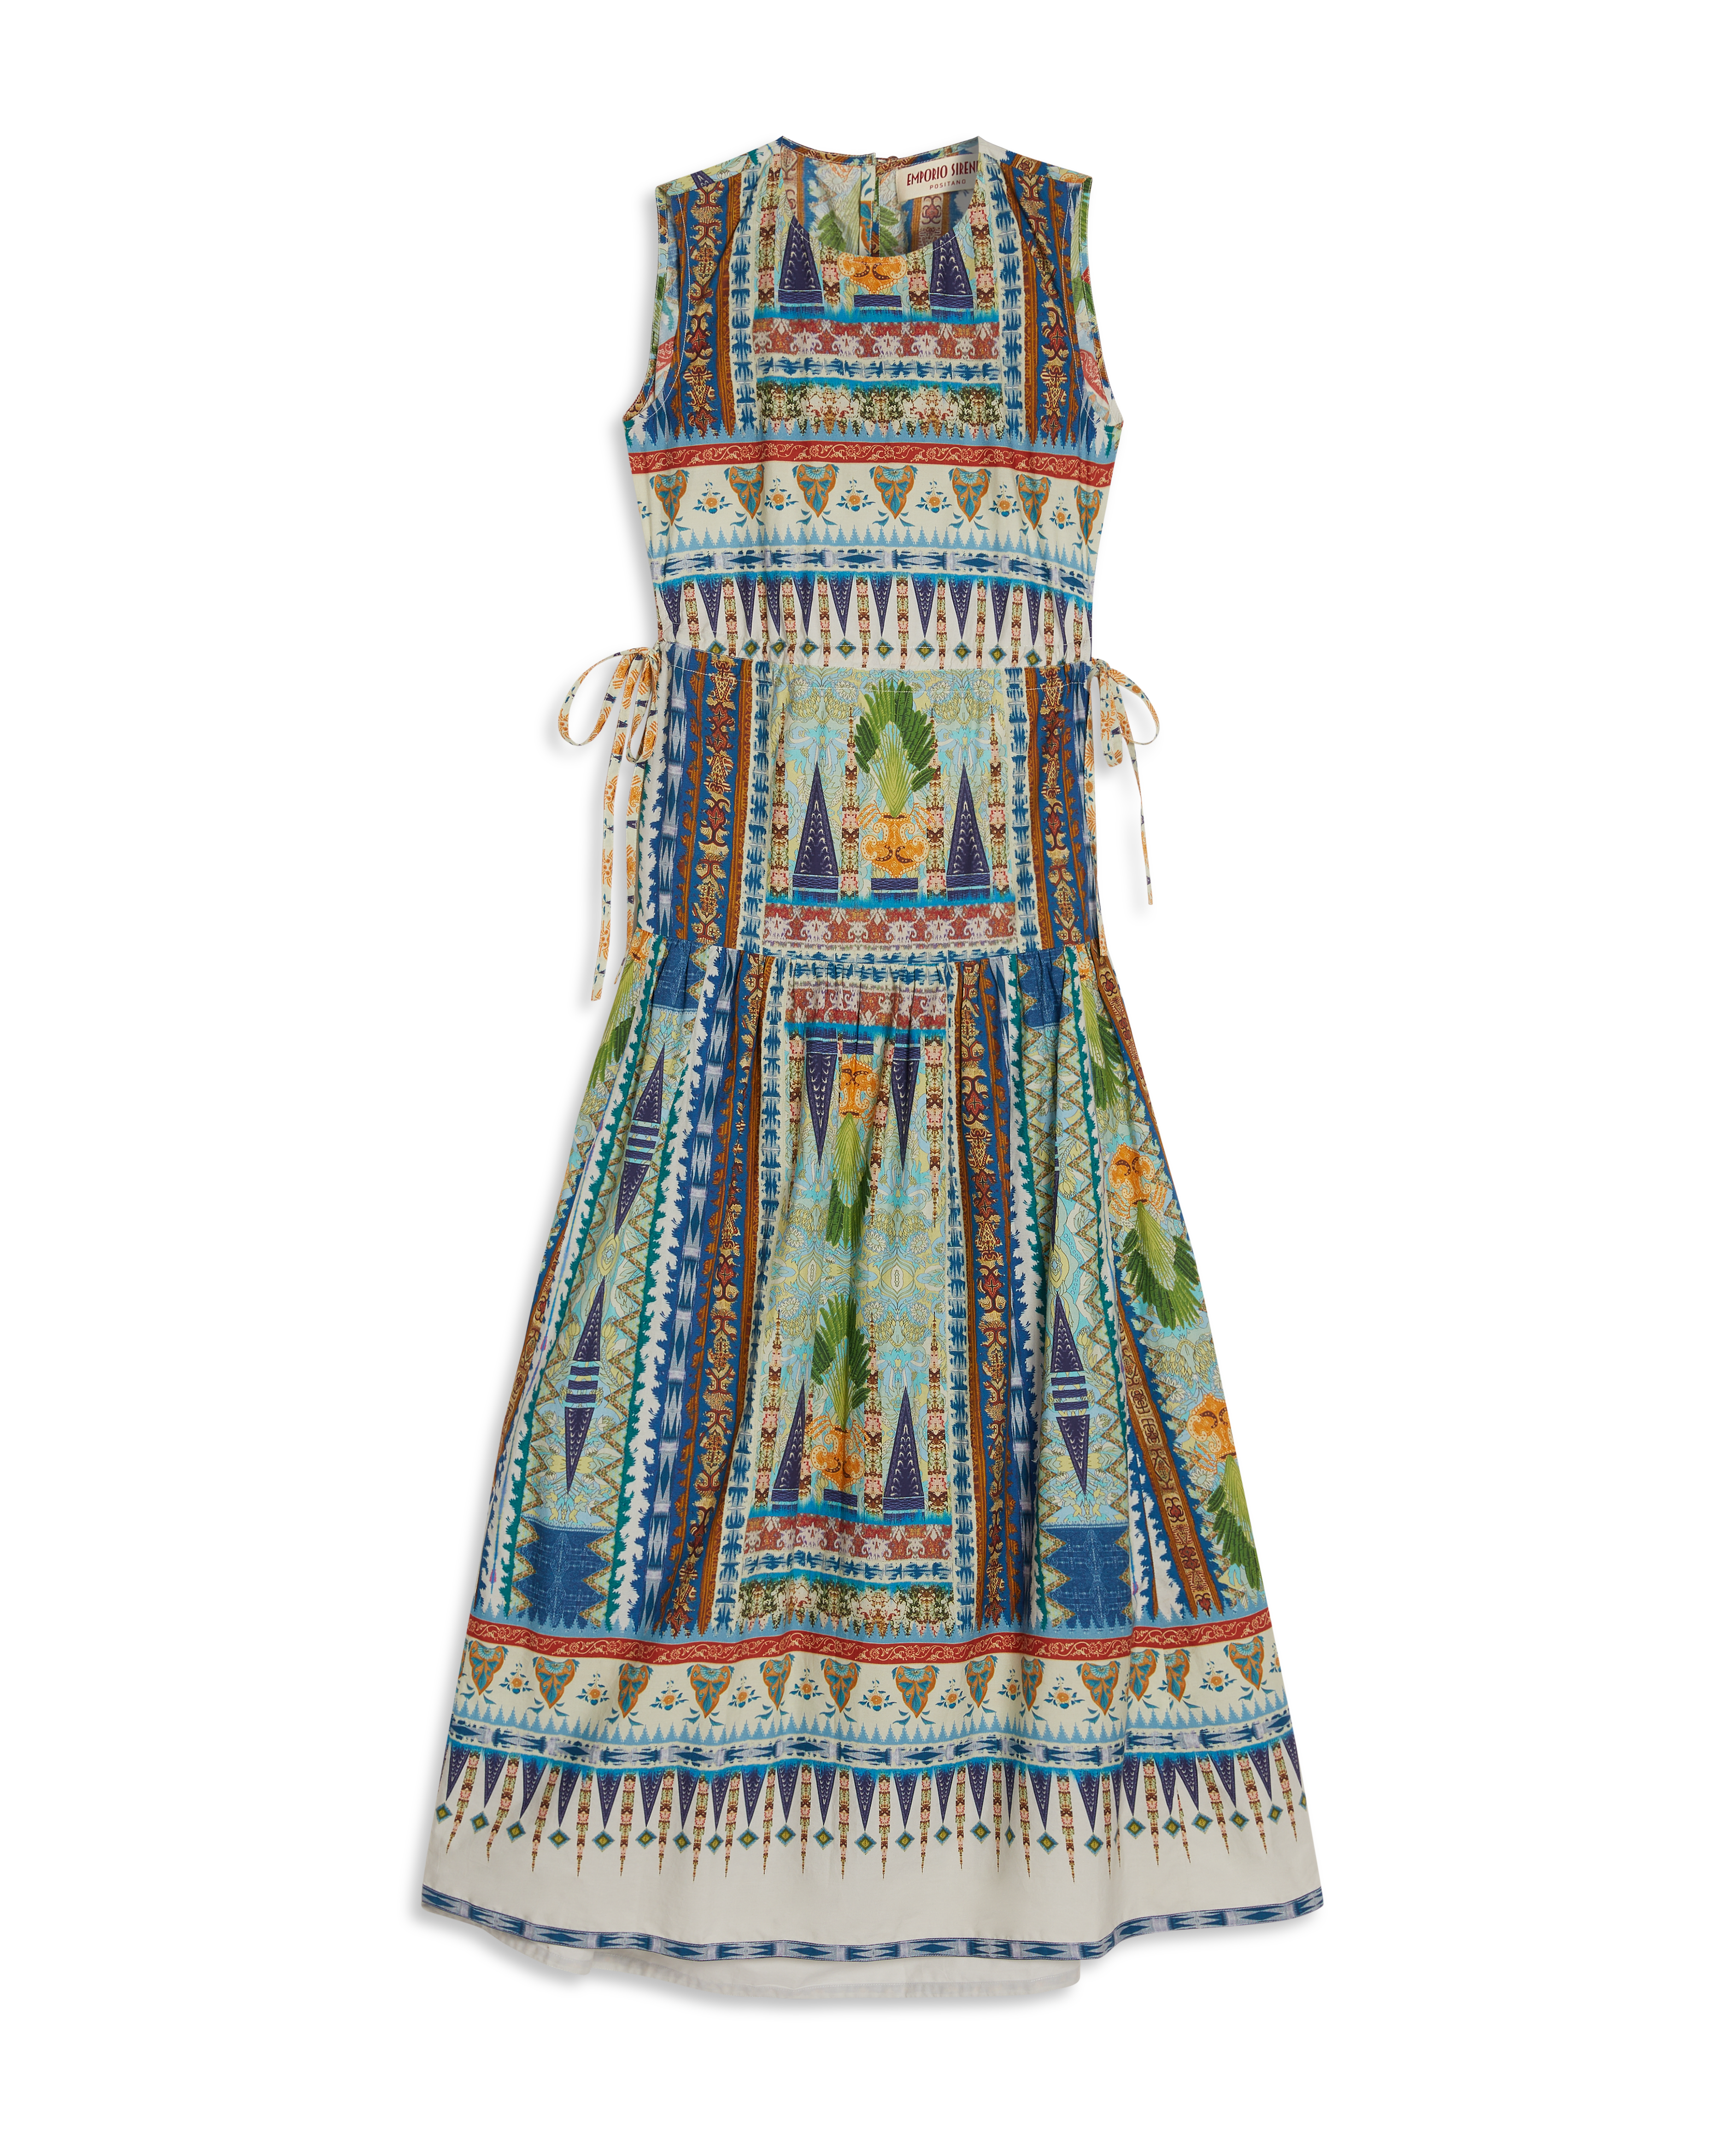 Pulcheria Dress in Jada Print